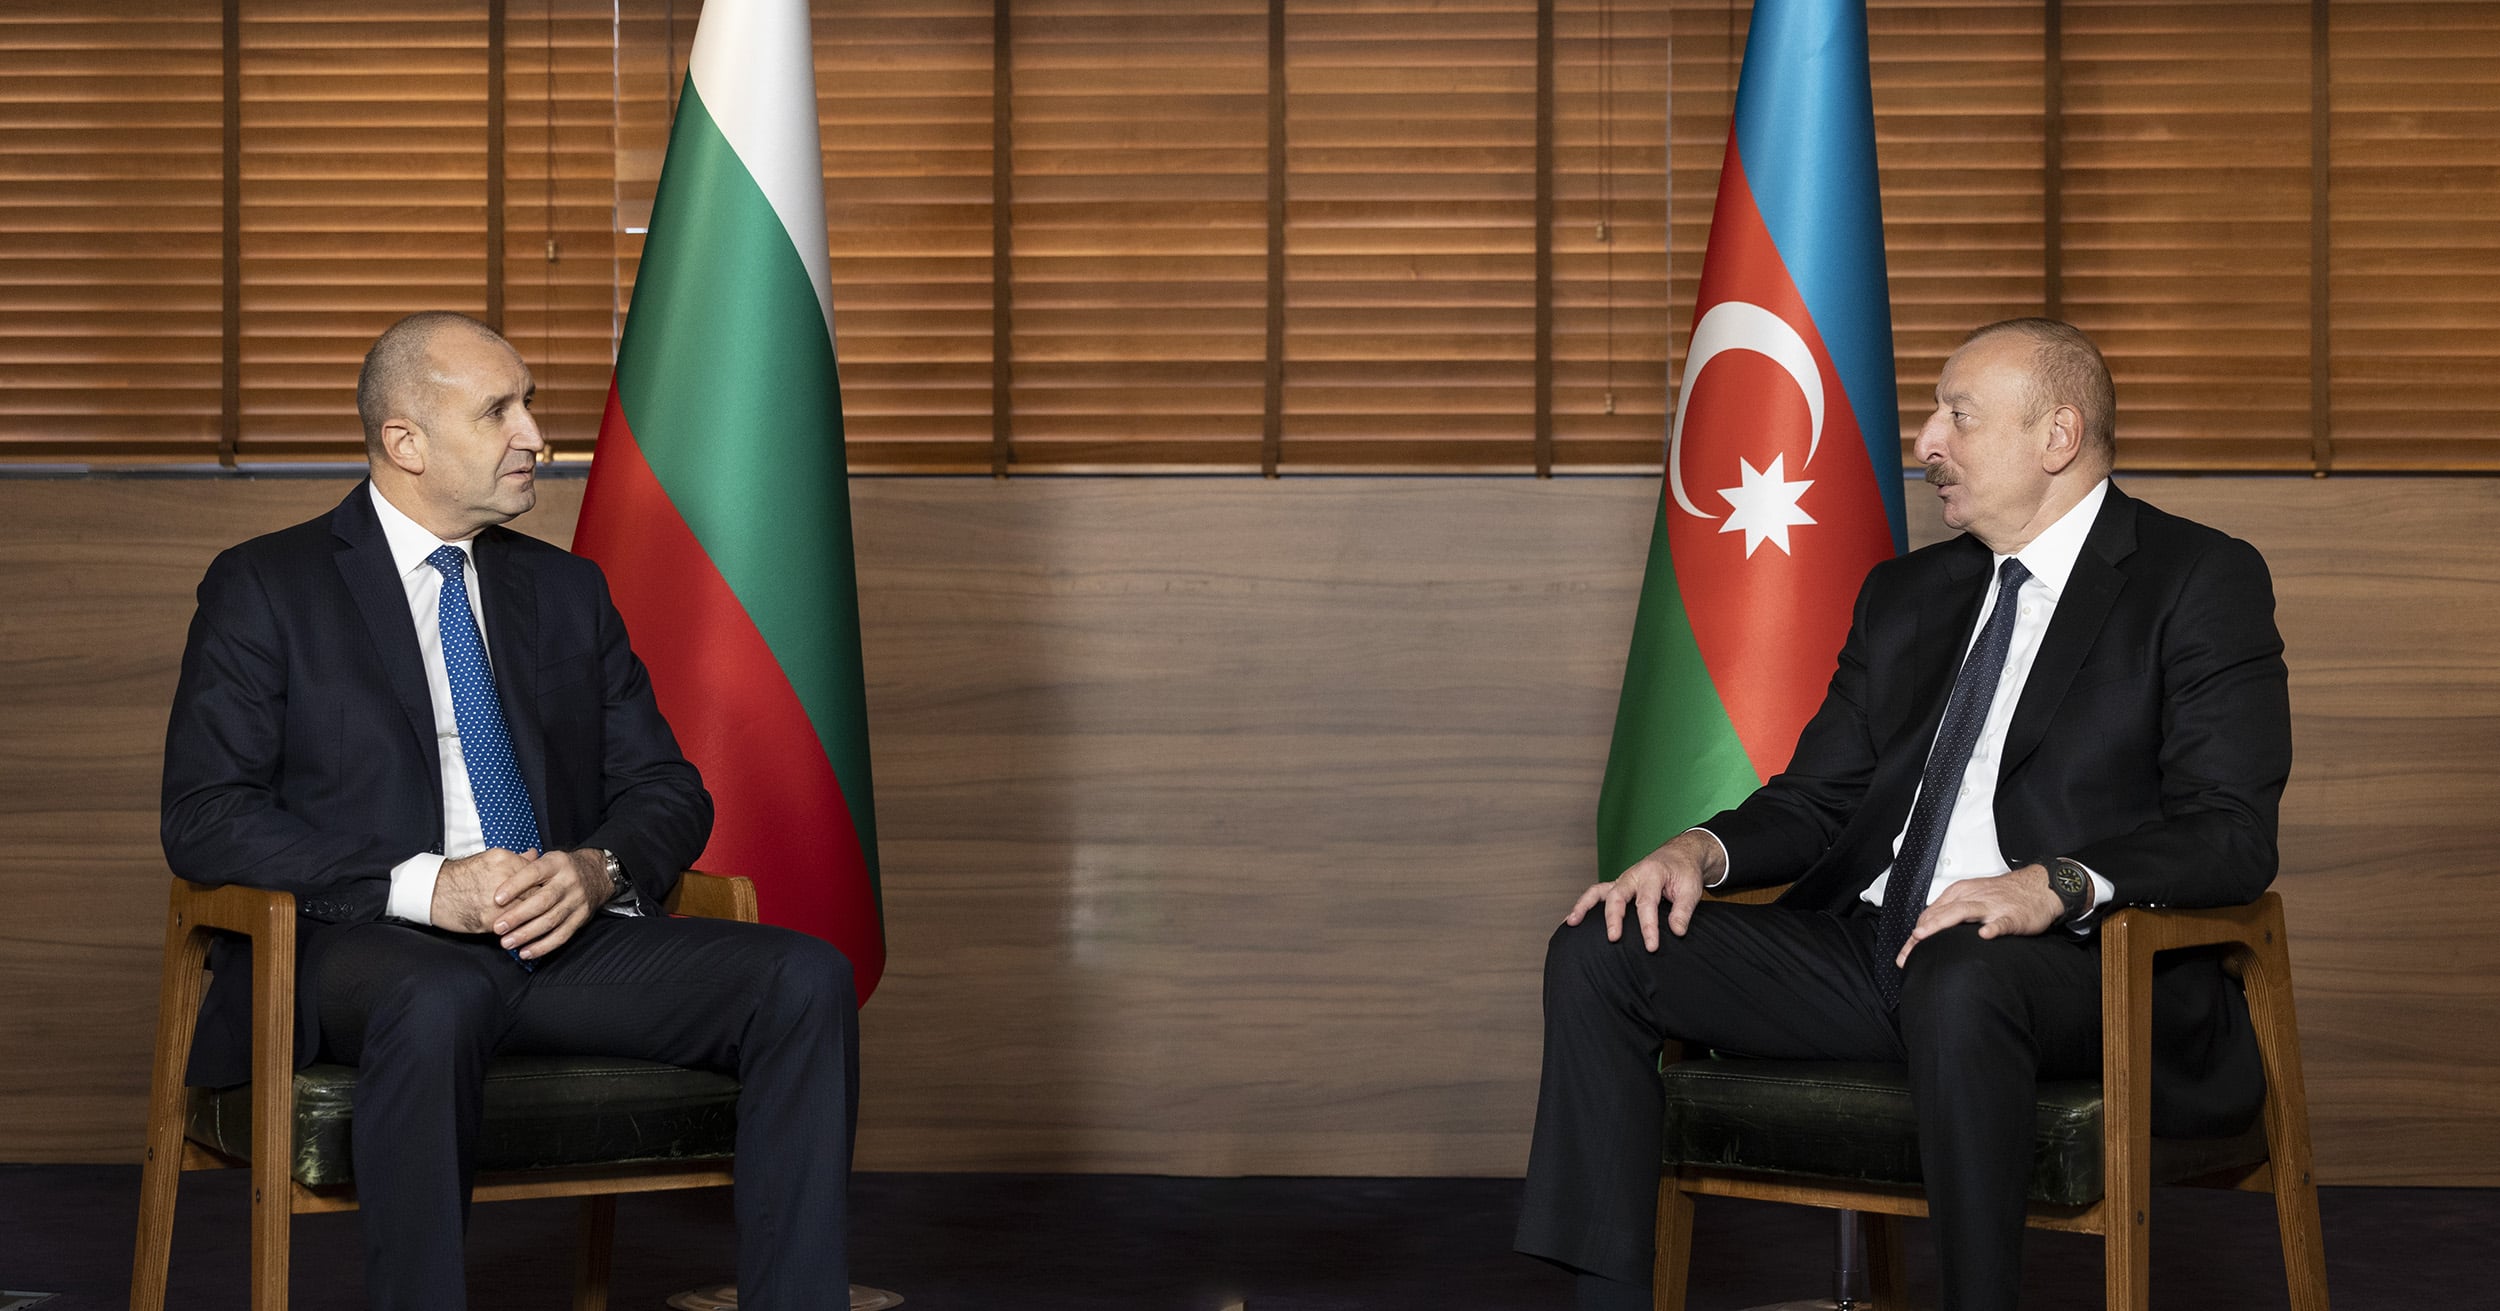 Румен Радев и Илхам Алиев Снимка Президентство
Стратегическото партньорство между България